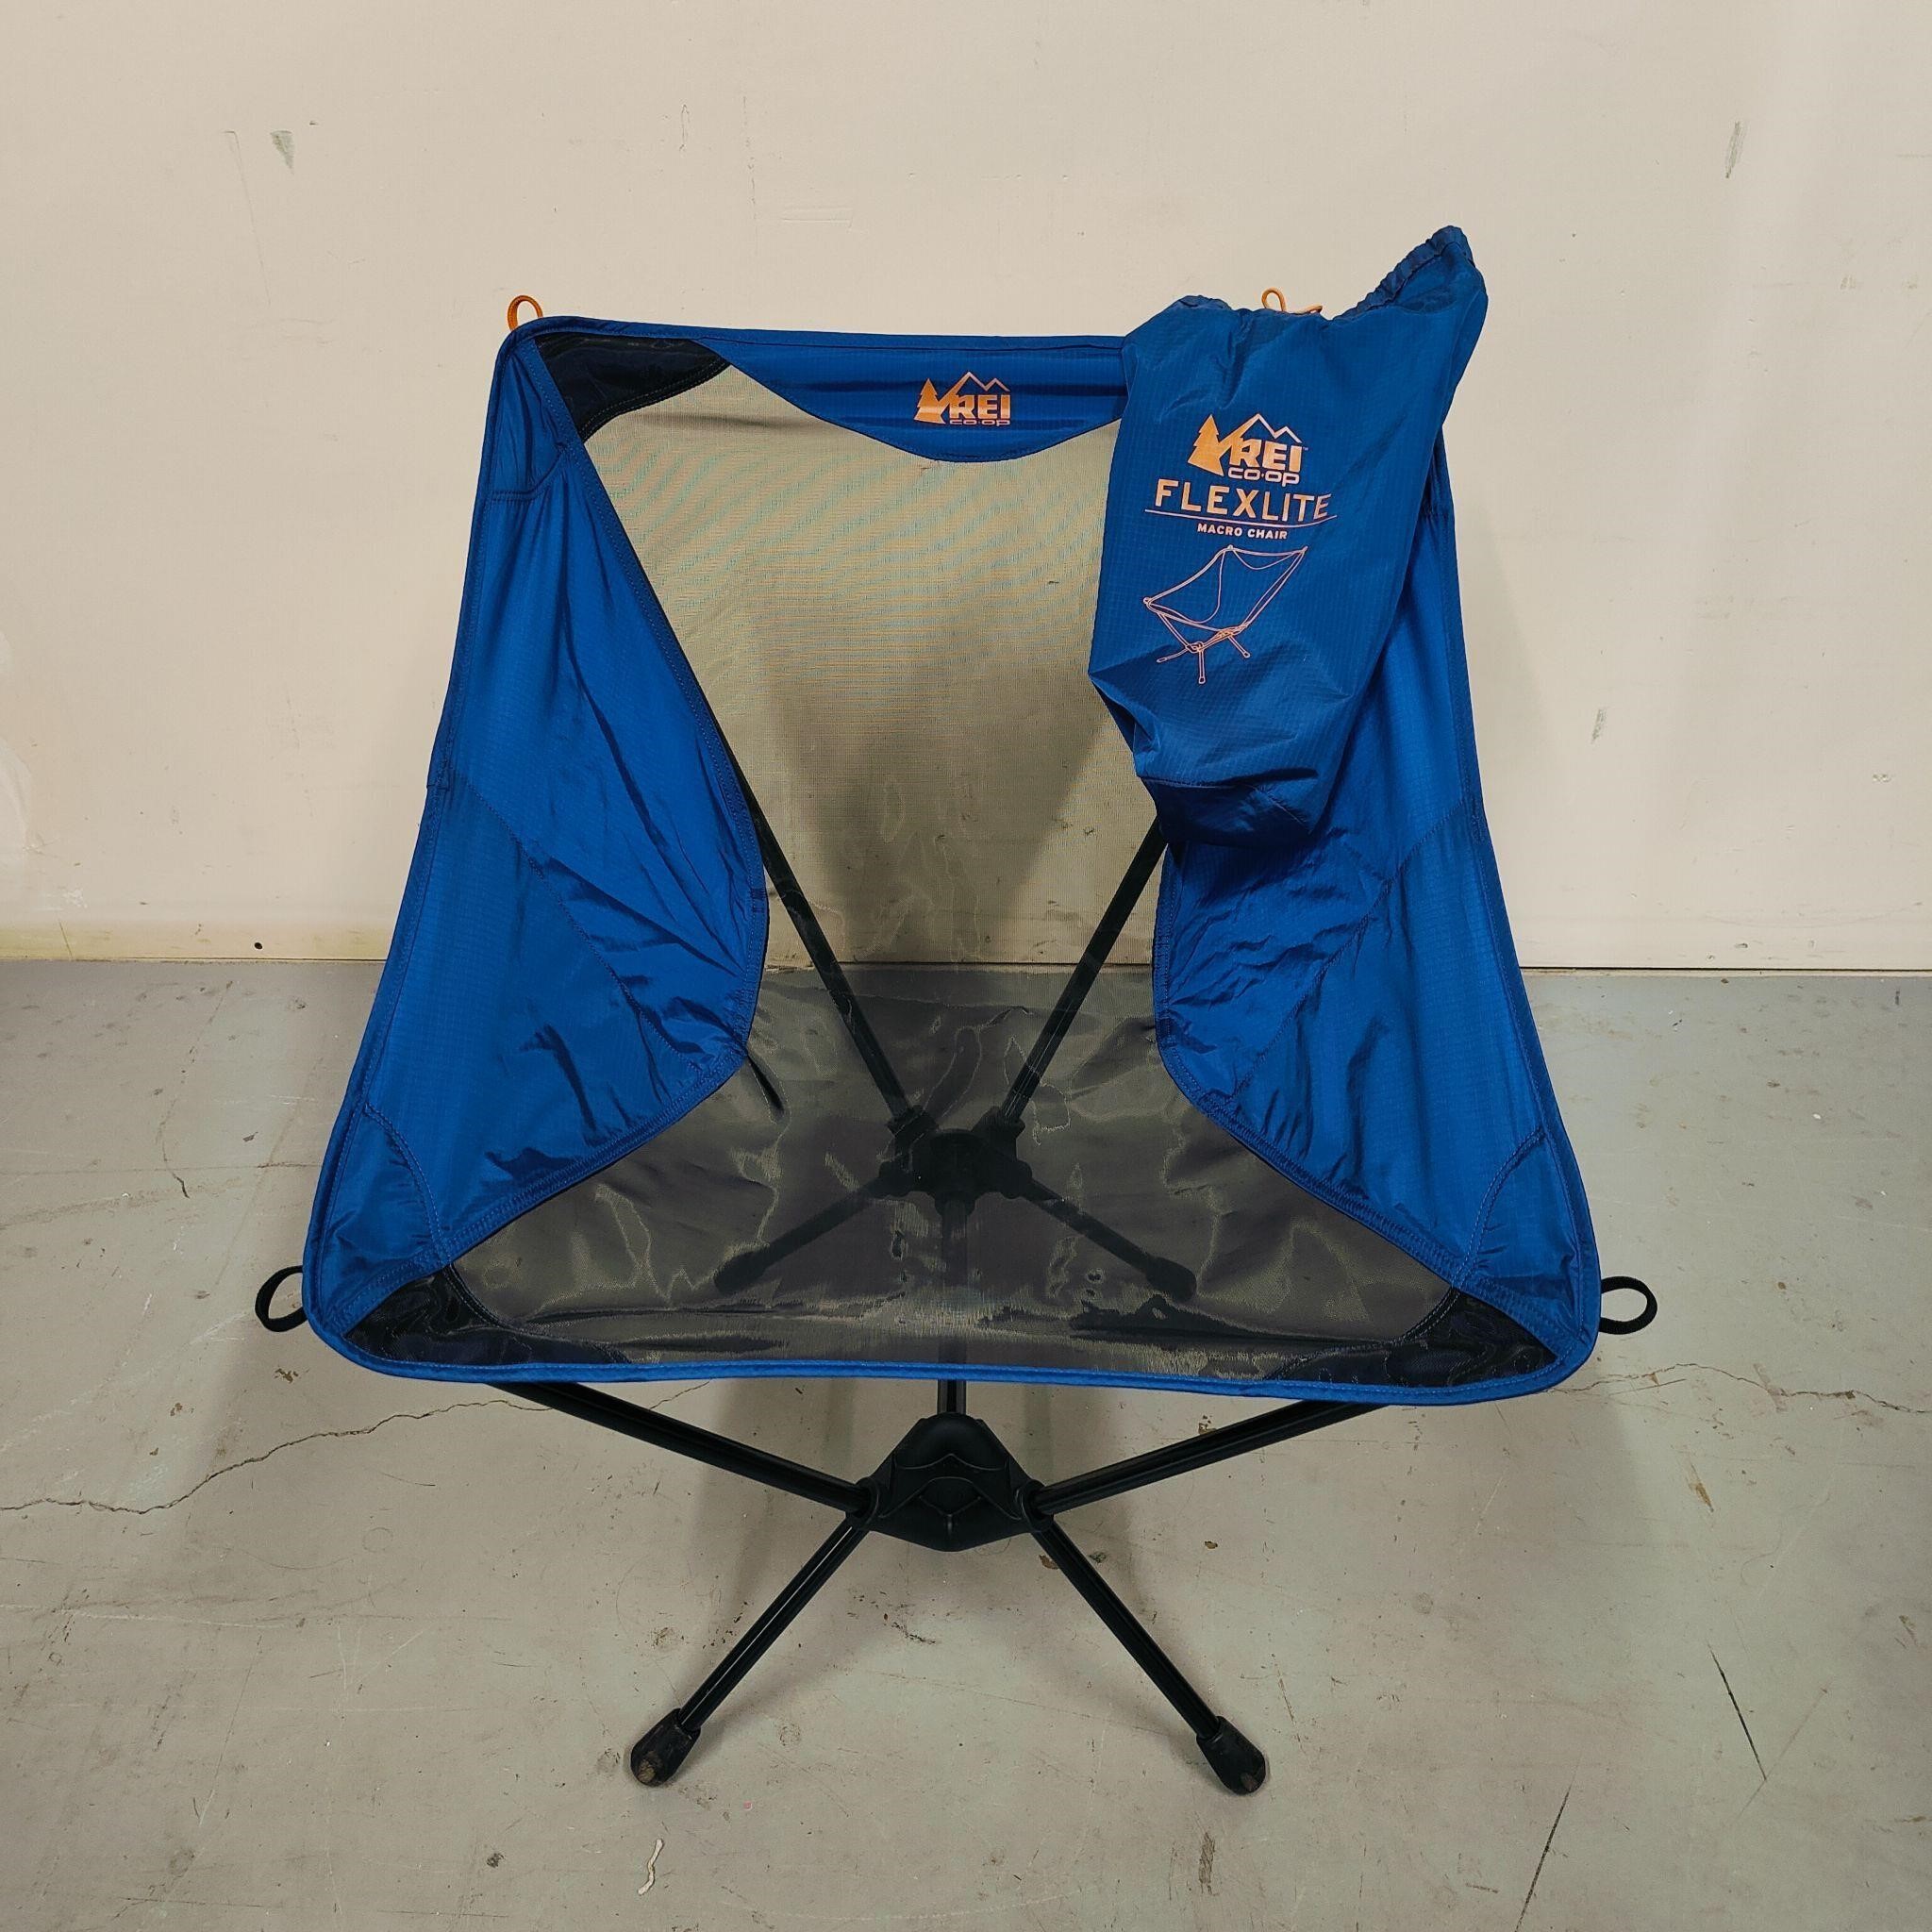 REI Flexlite Macro Chair